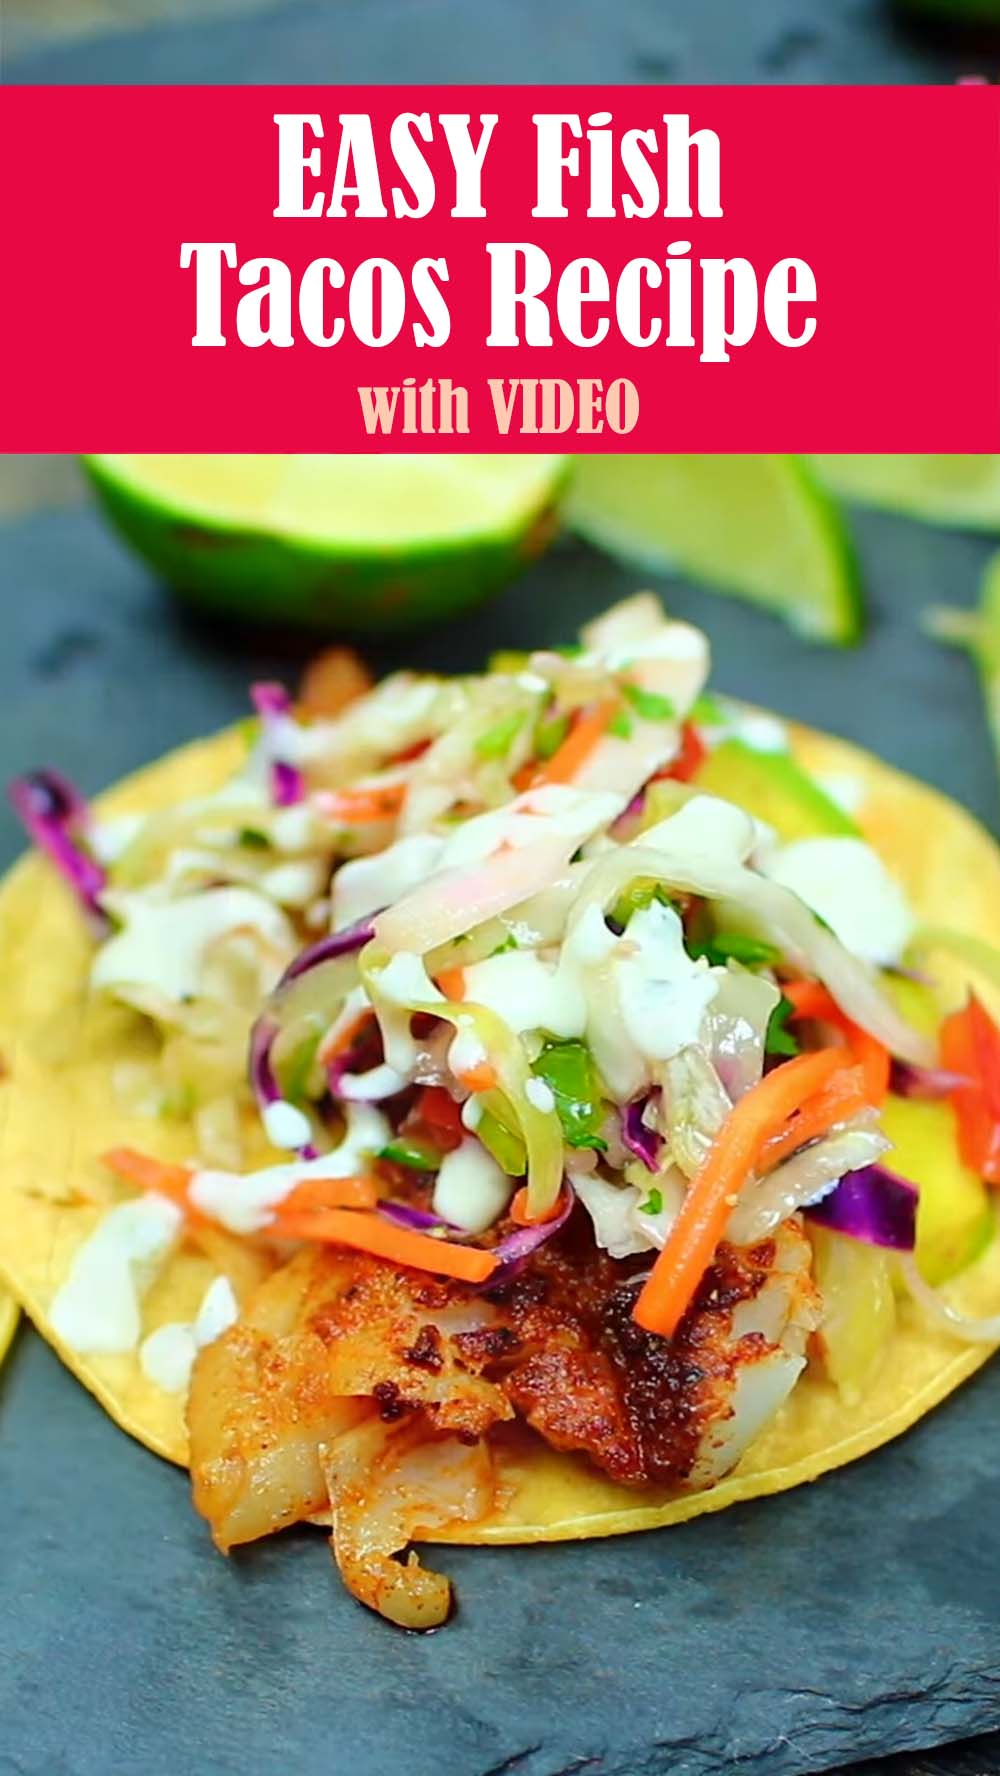 EASY Fish Tacos Recipe